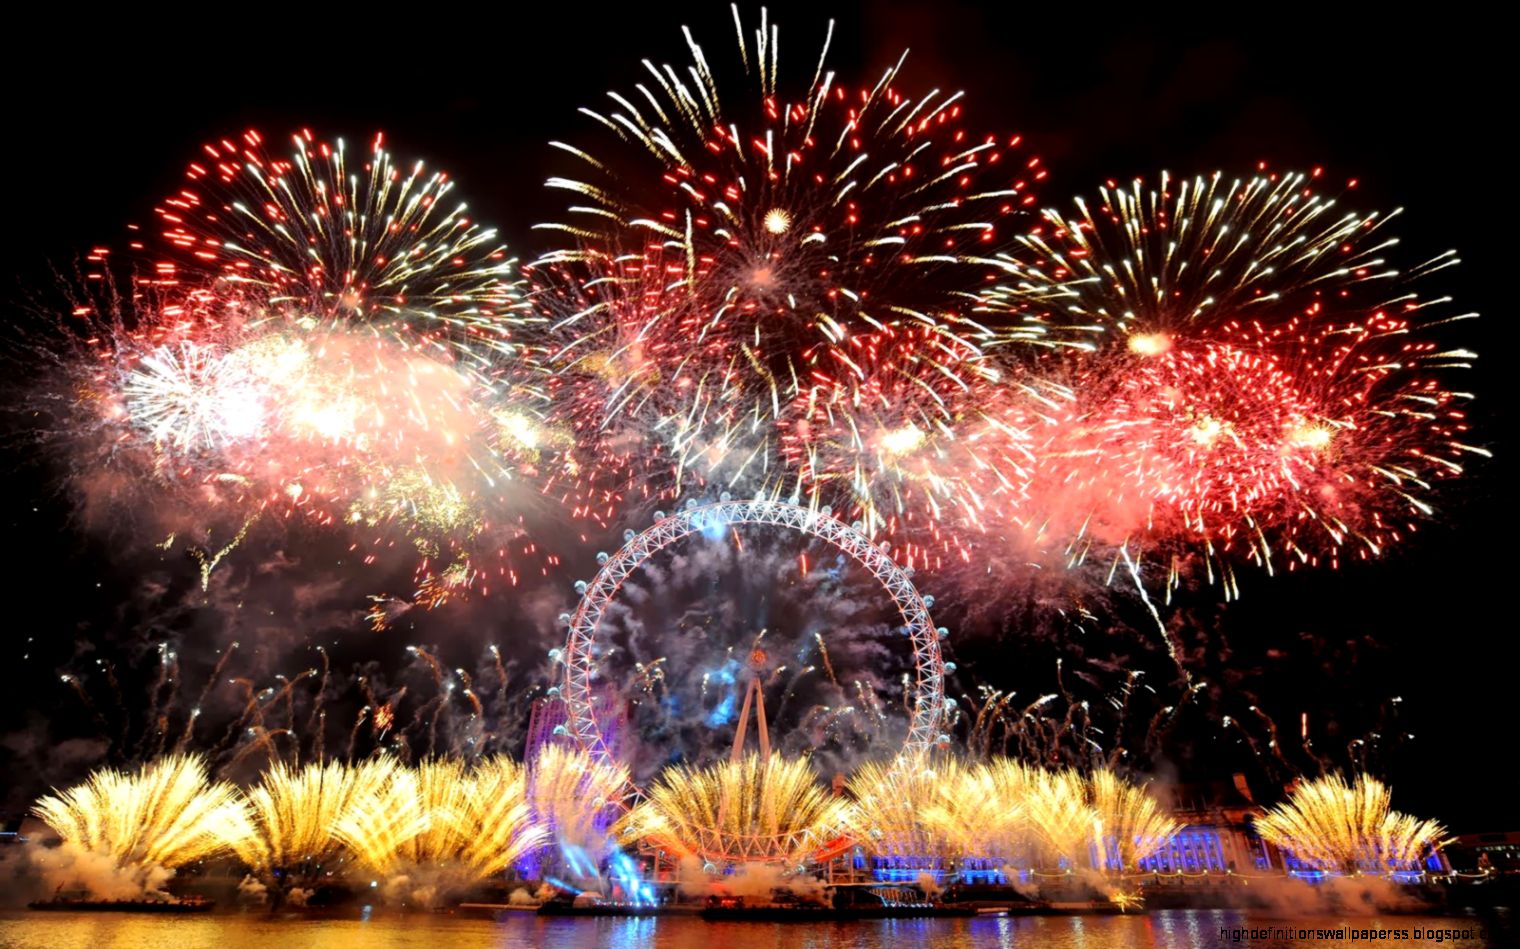 Fireworks Celebrate New Year Wallpaper | High Definitions Wallpapers
 New Years Fireworks Wallpaper 2015